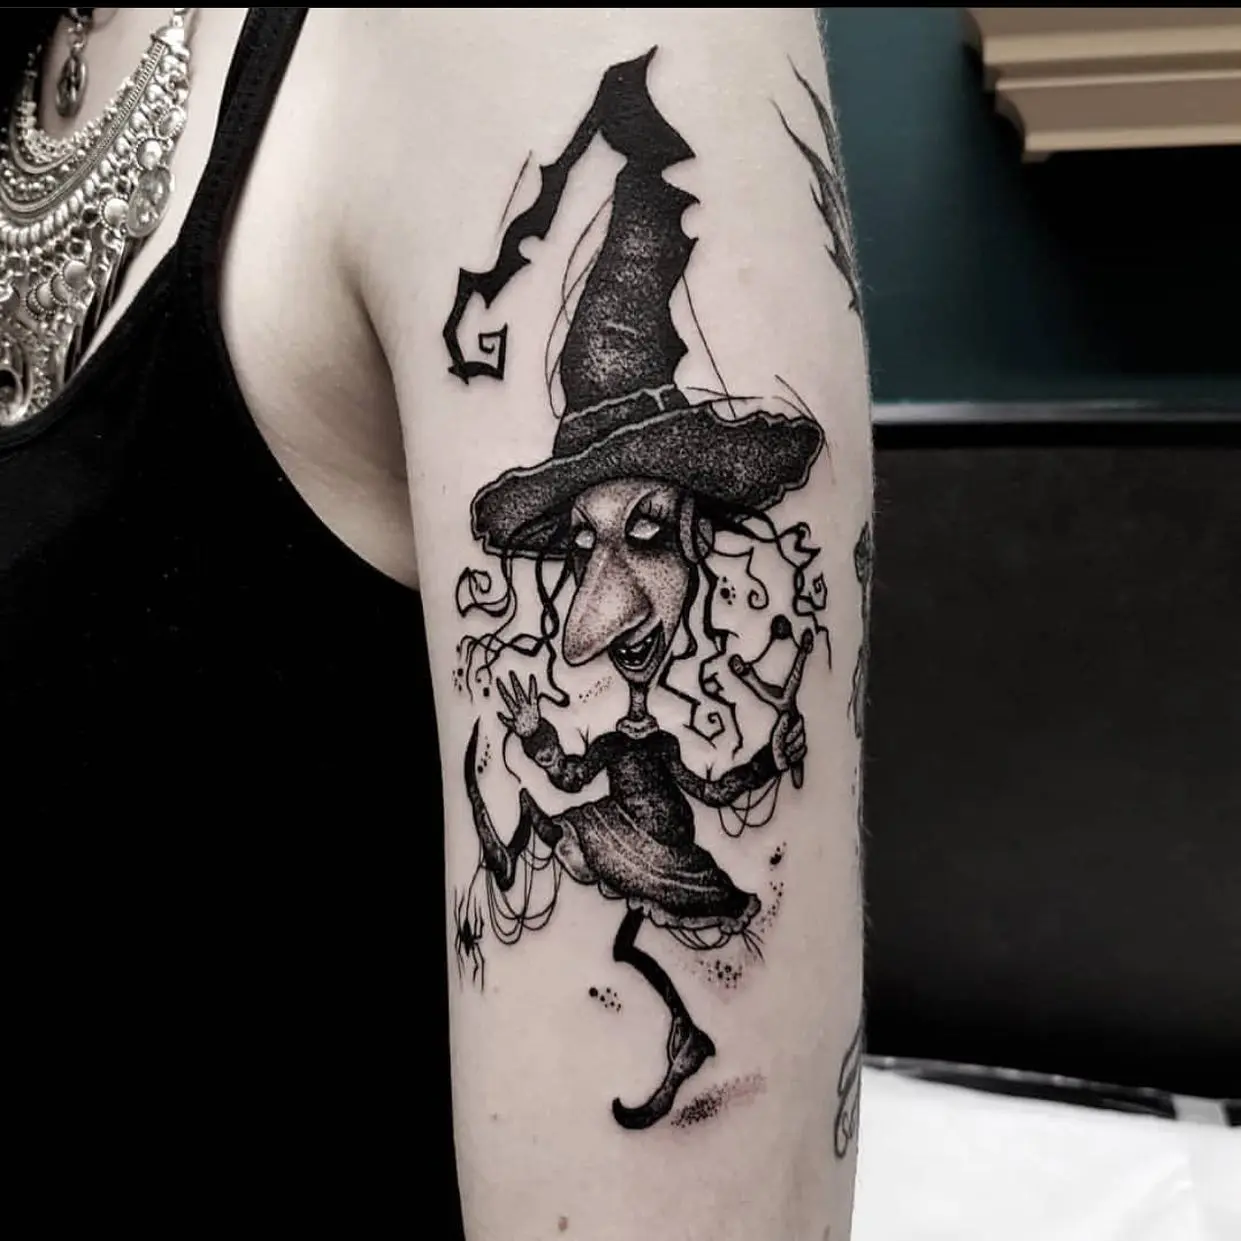 Wickedwitch tags tattoo ideas  World Tattoo Gallery